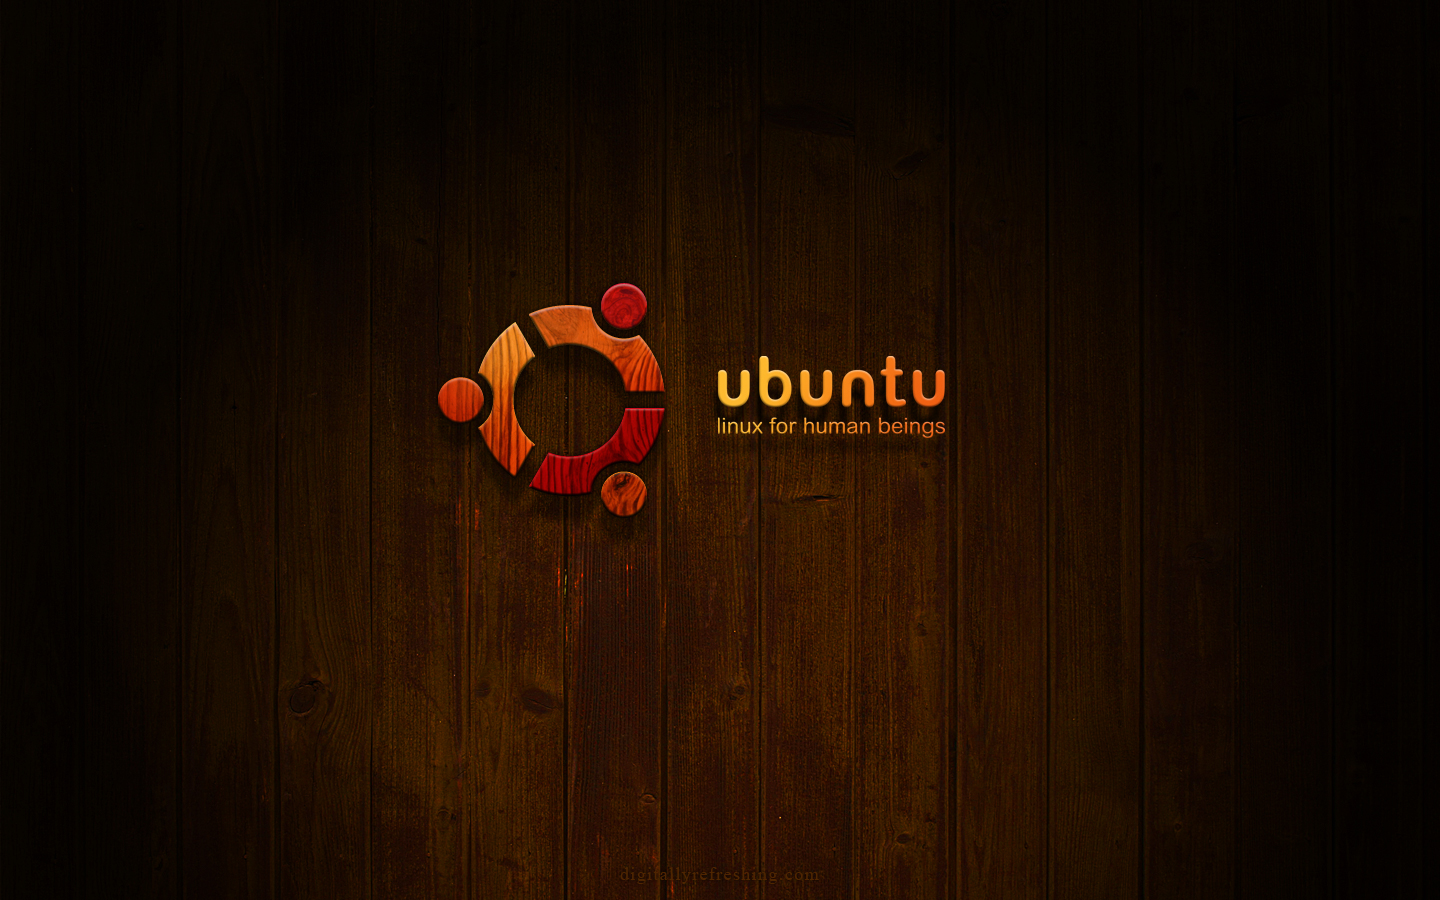 wallpaper ubuntu www uluga ubuntuforums org 1440x900